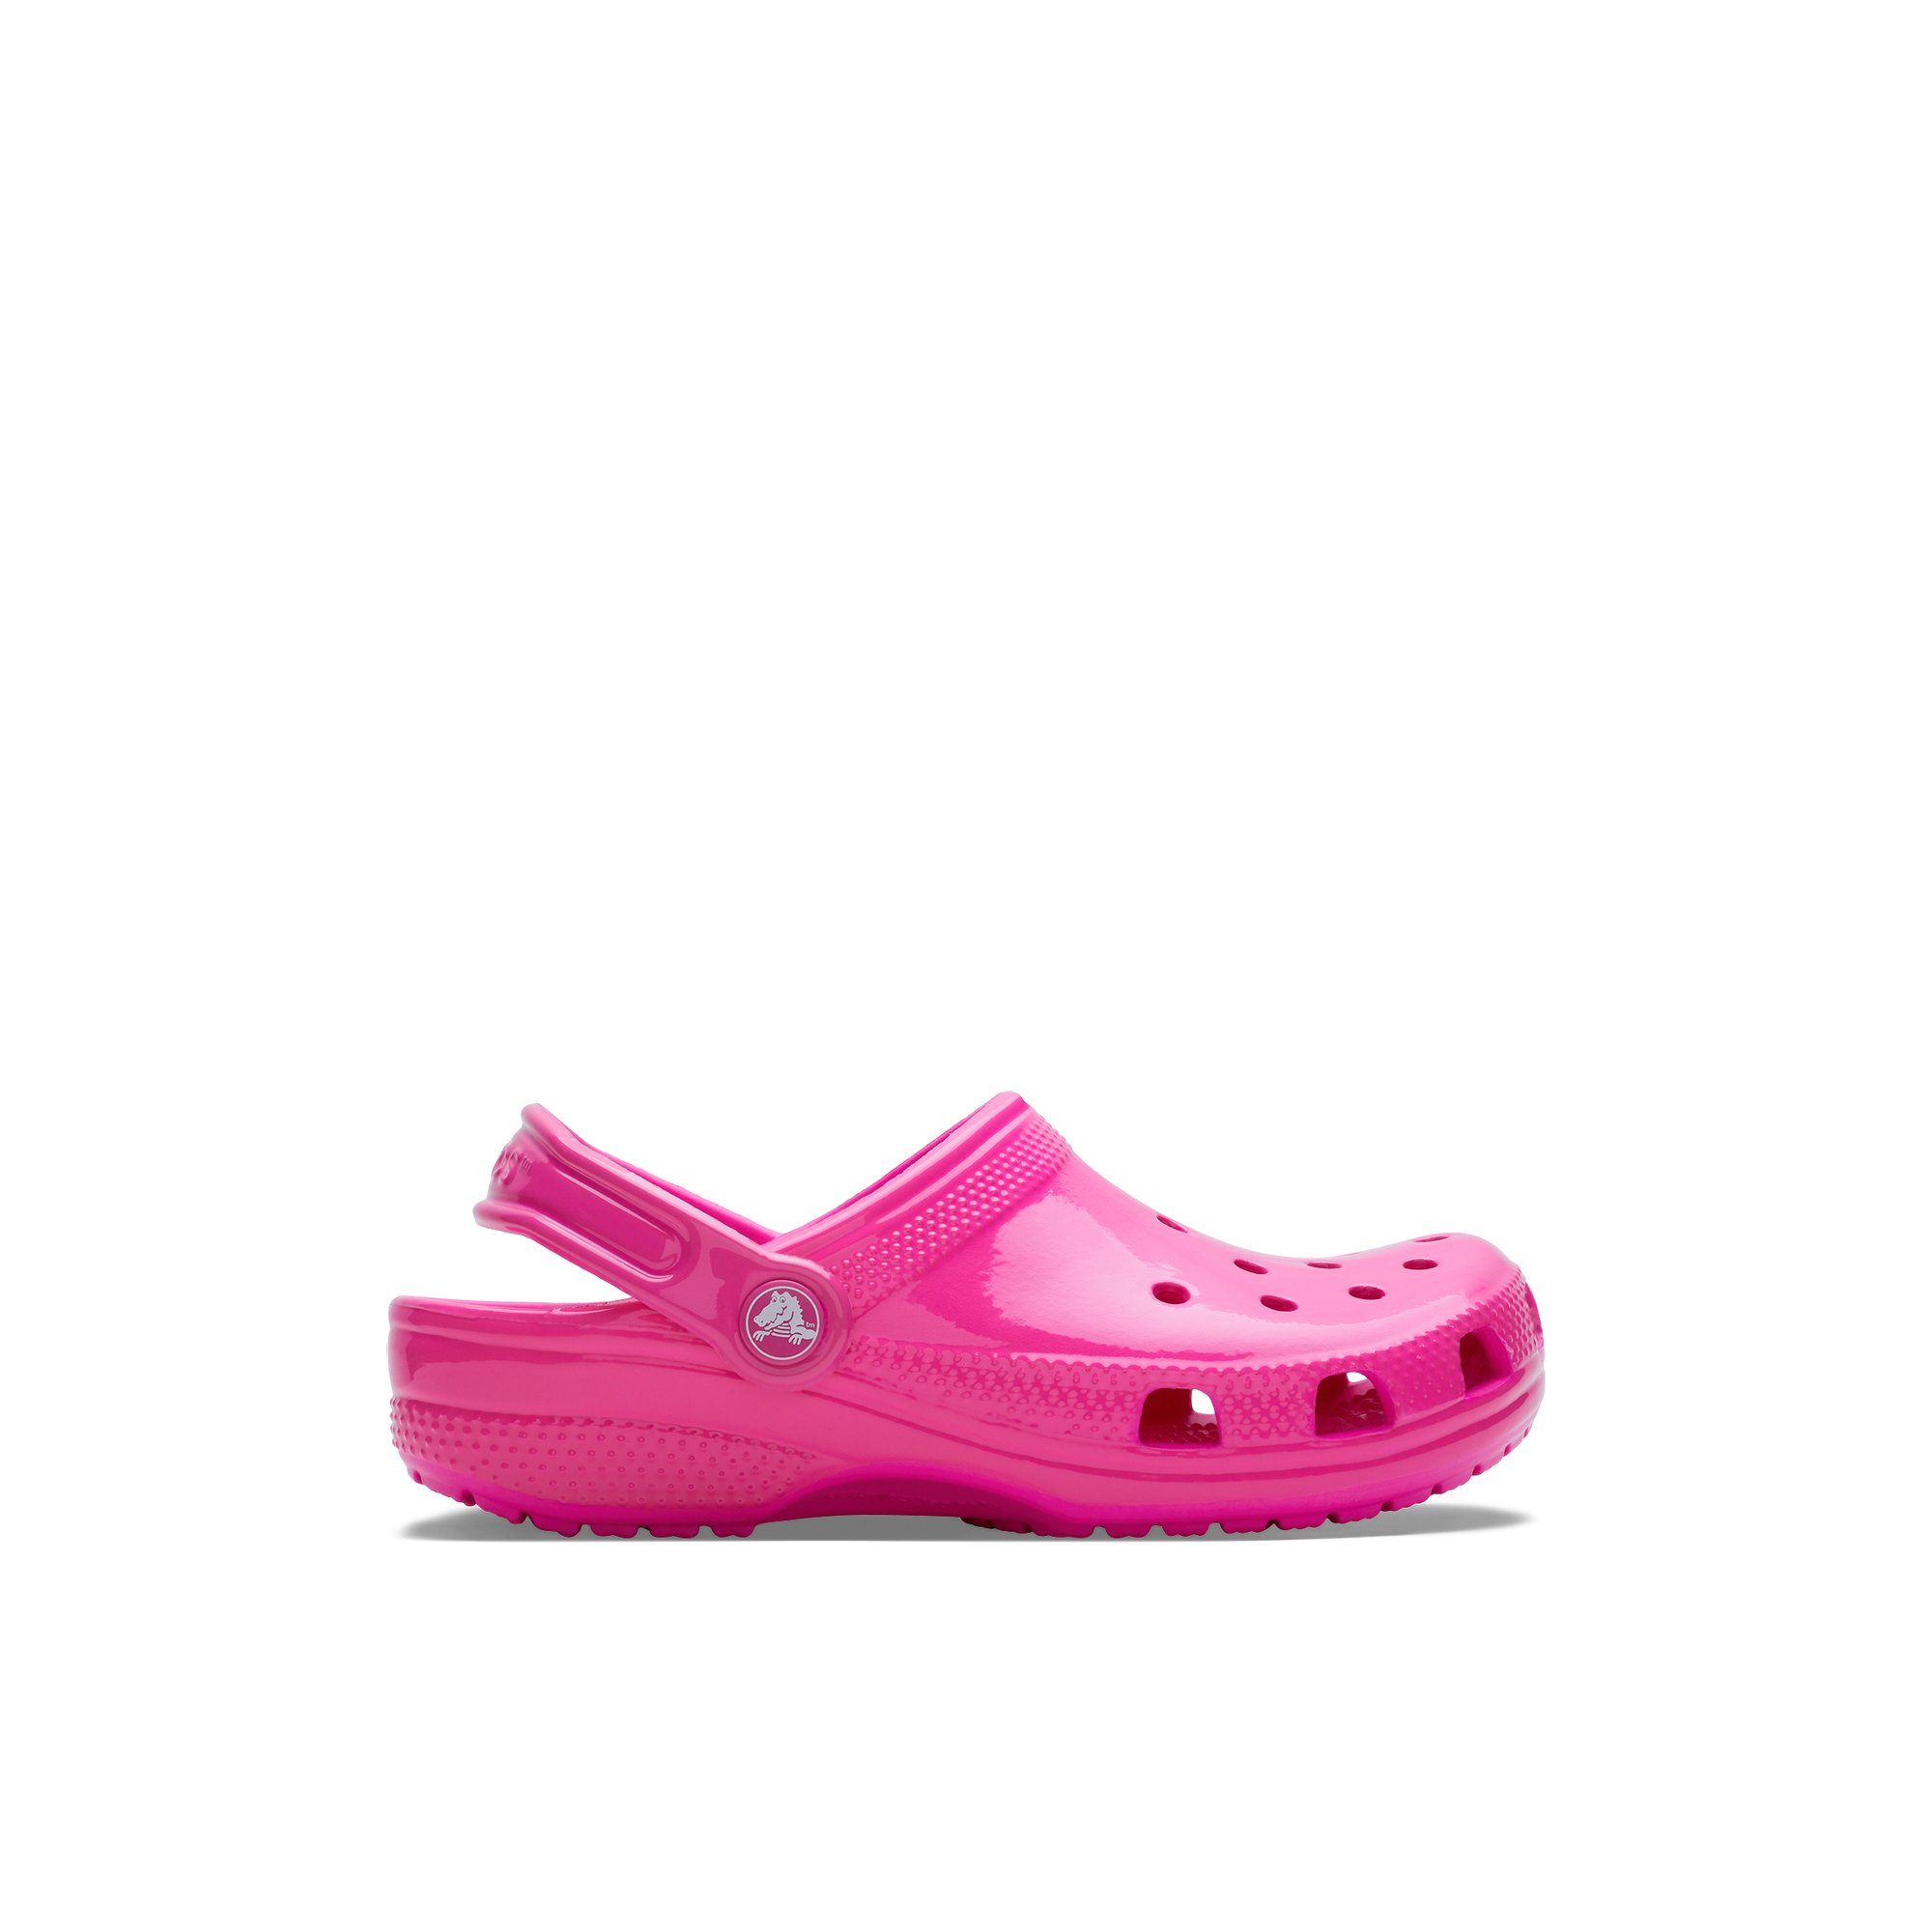 Crocs Classic Neon - Women's Footwear Sandals Slides Pink